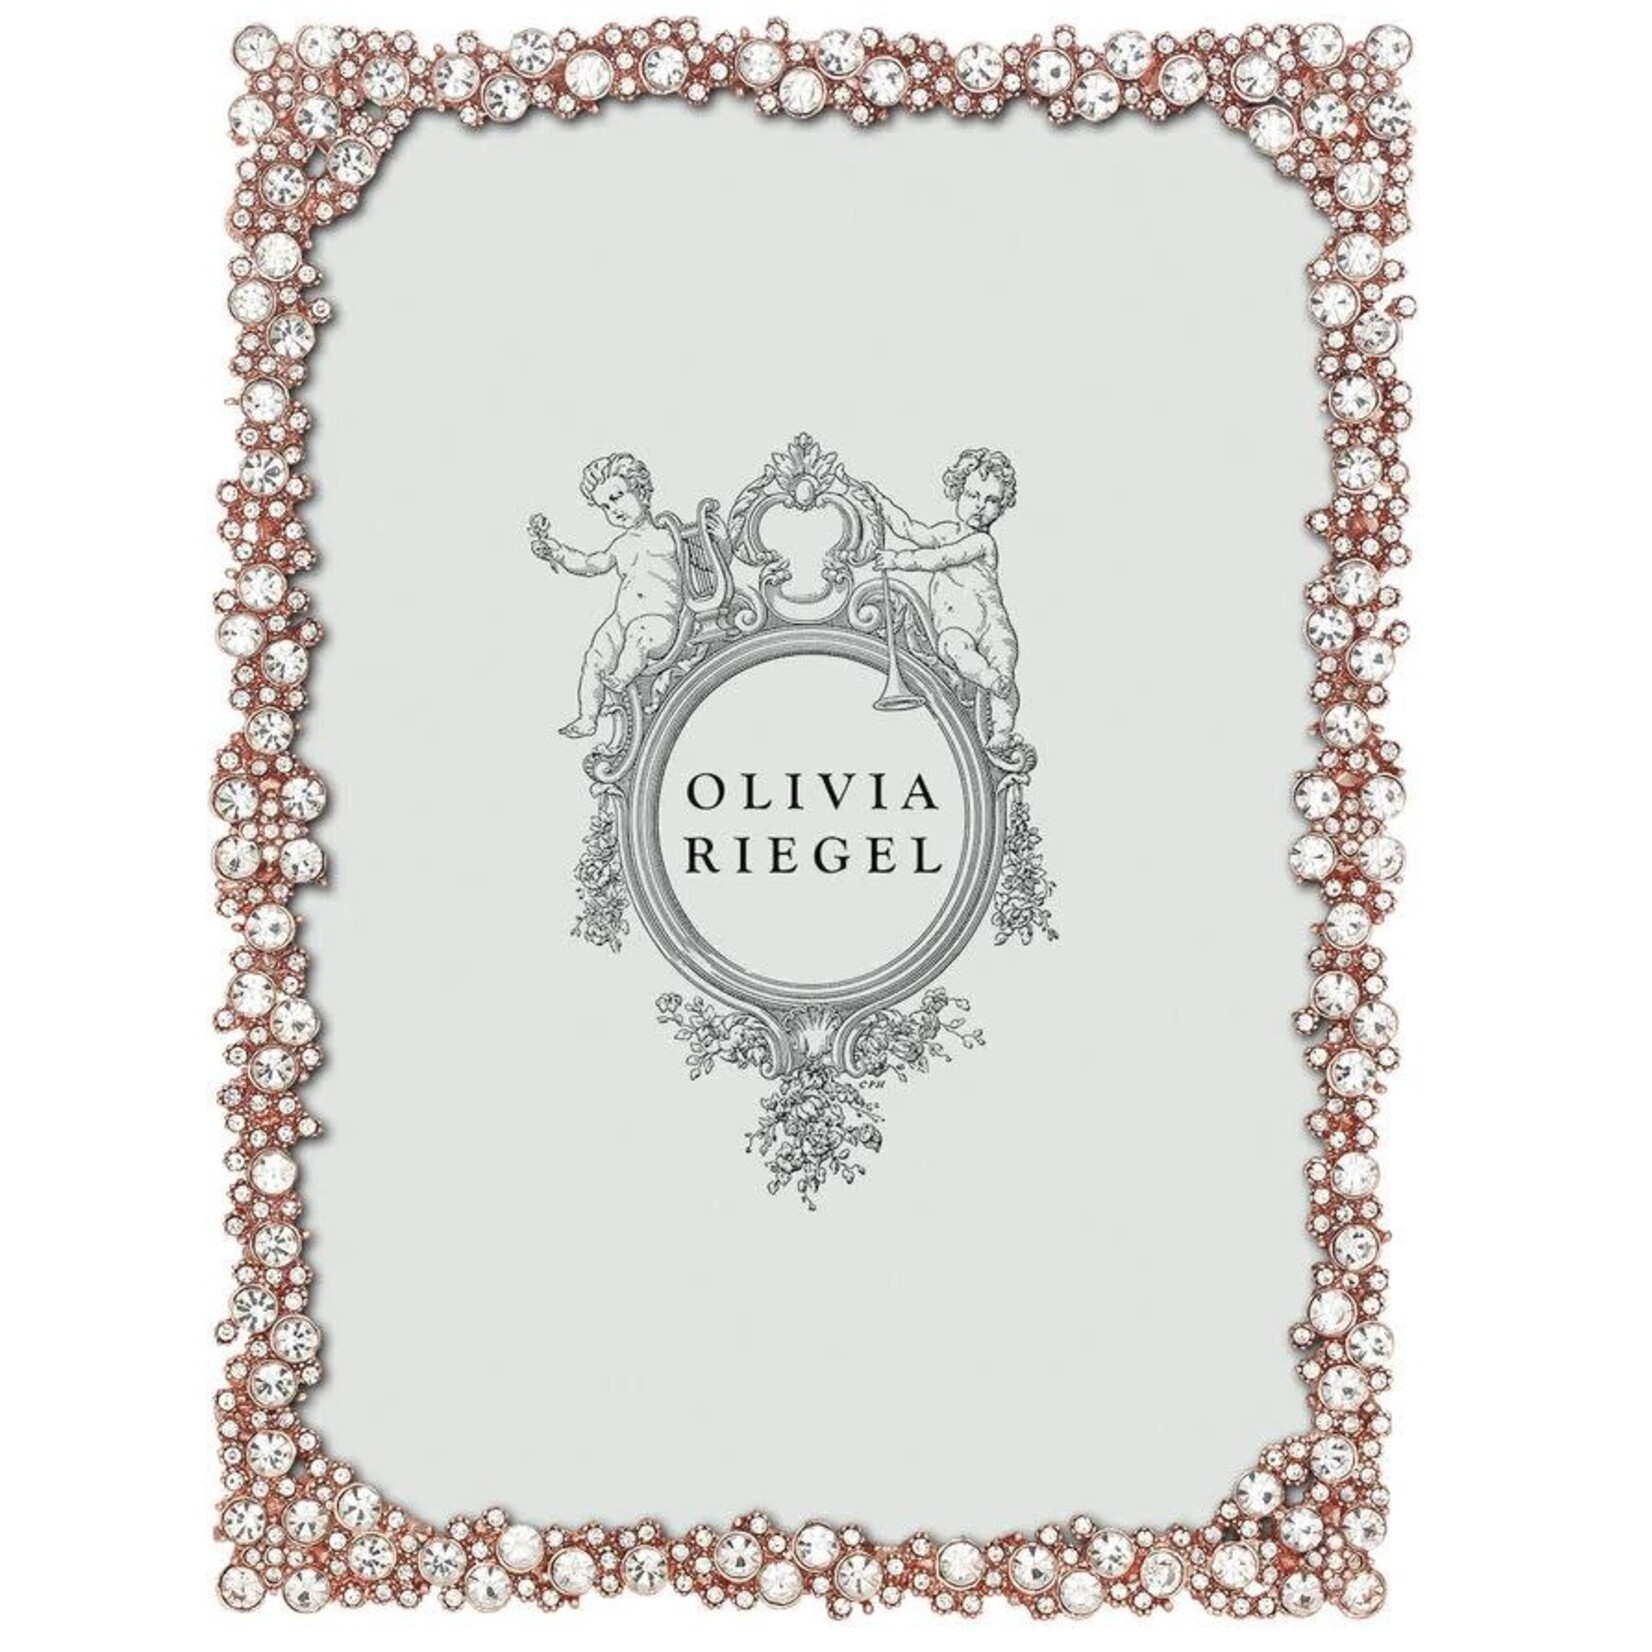 Olivia Riegel Rose Gold Princess Frame 4x6